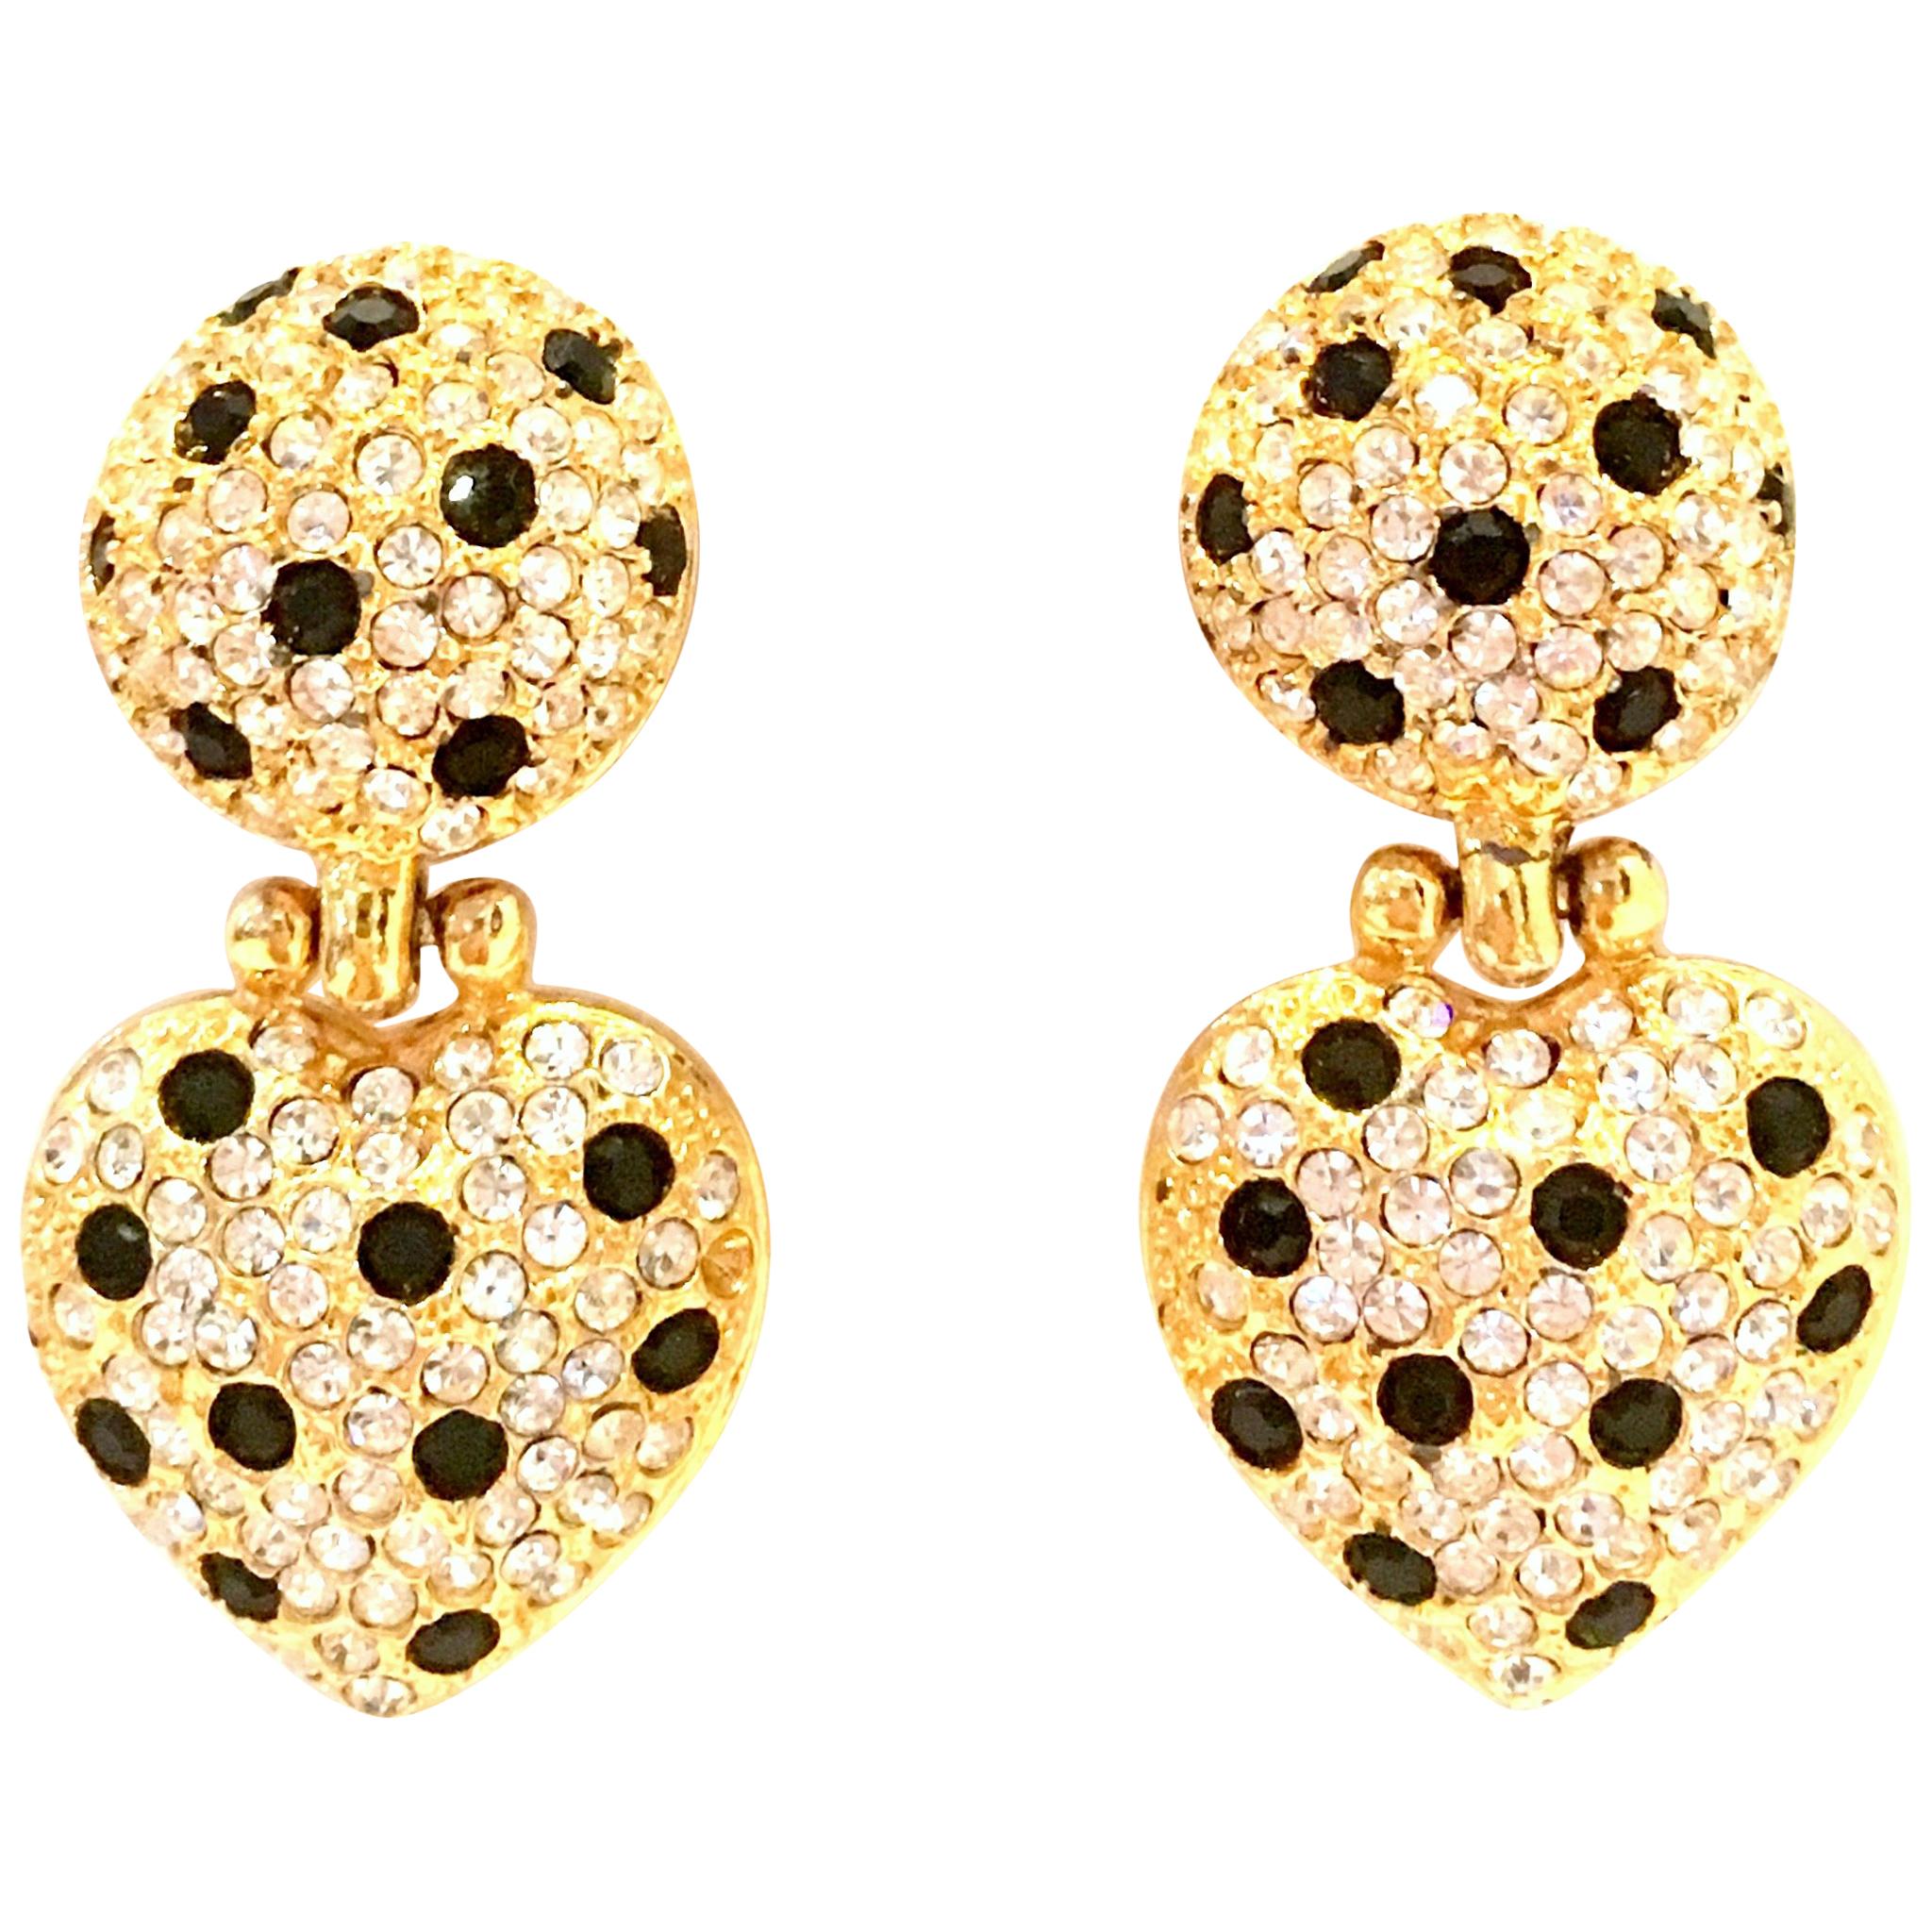 21st Century Gold Swarovski Crystal Heart Earrings By, Joan Rivers For Sale